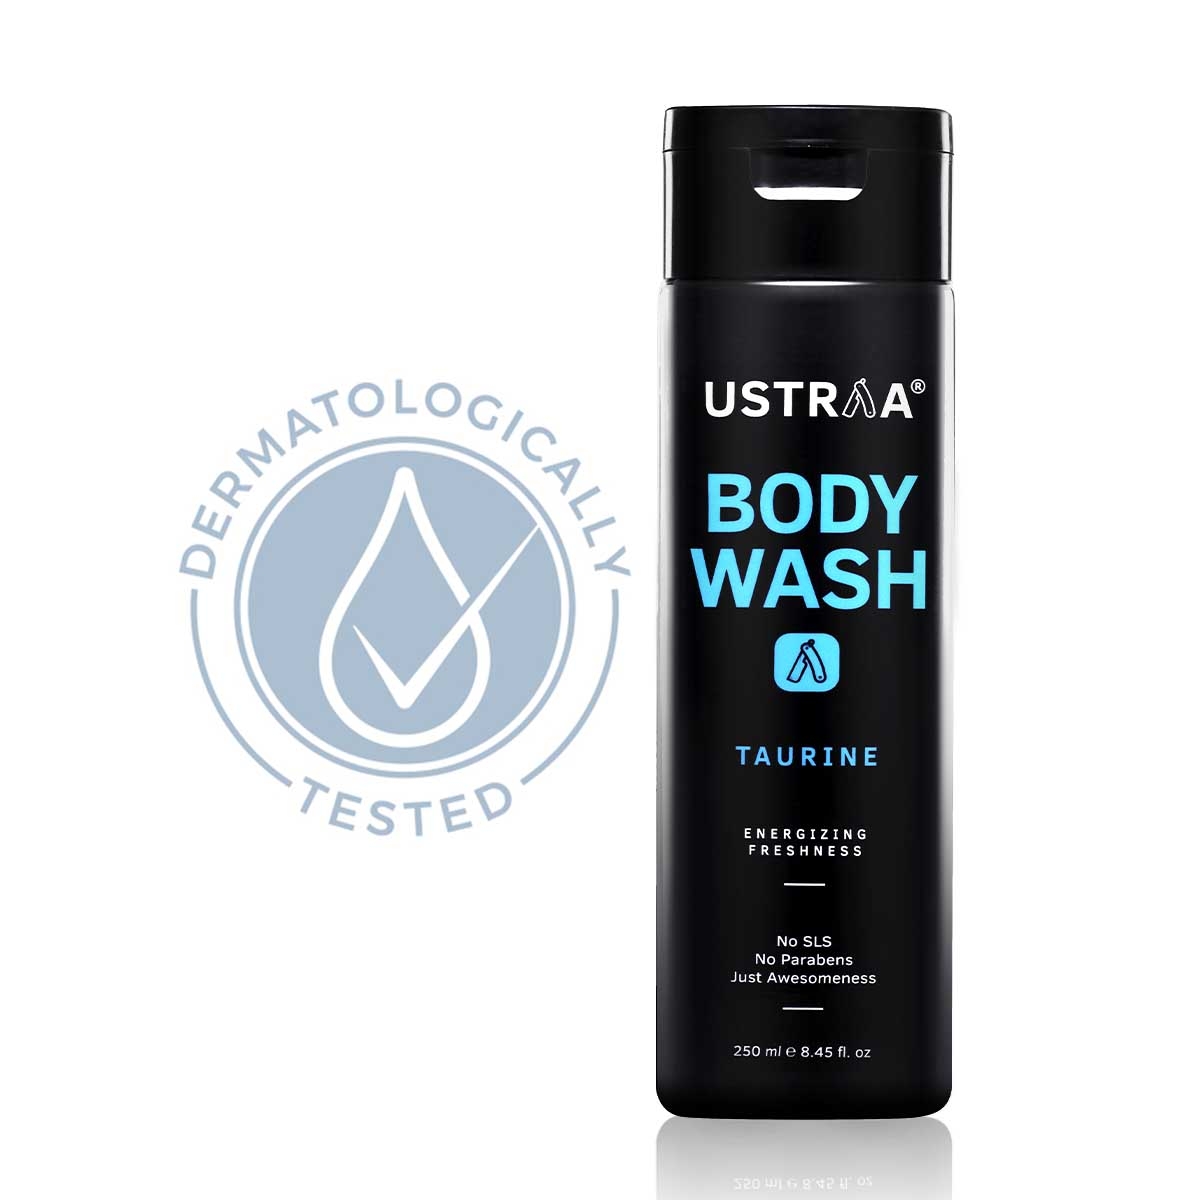 Ustraa | Ustraa Body Lotion Germ Free - 200ml & Body Wash - Taurine - 250ml
 3